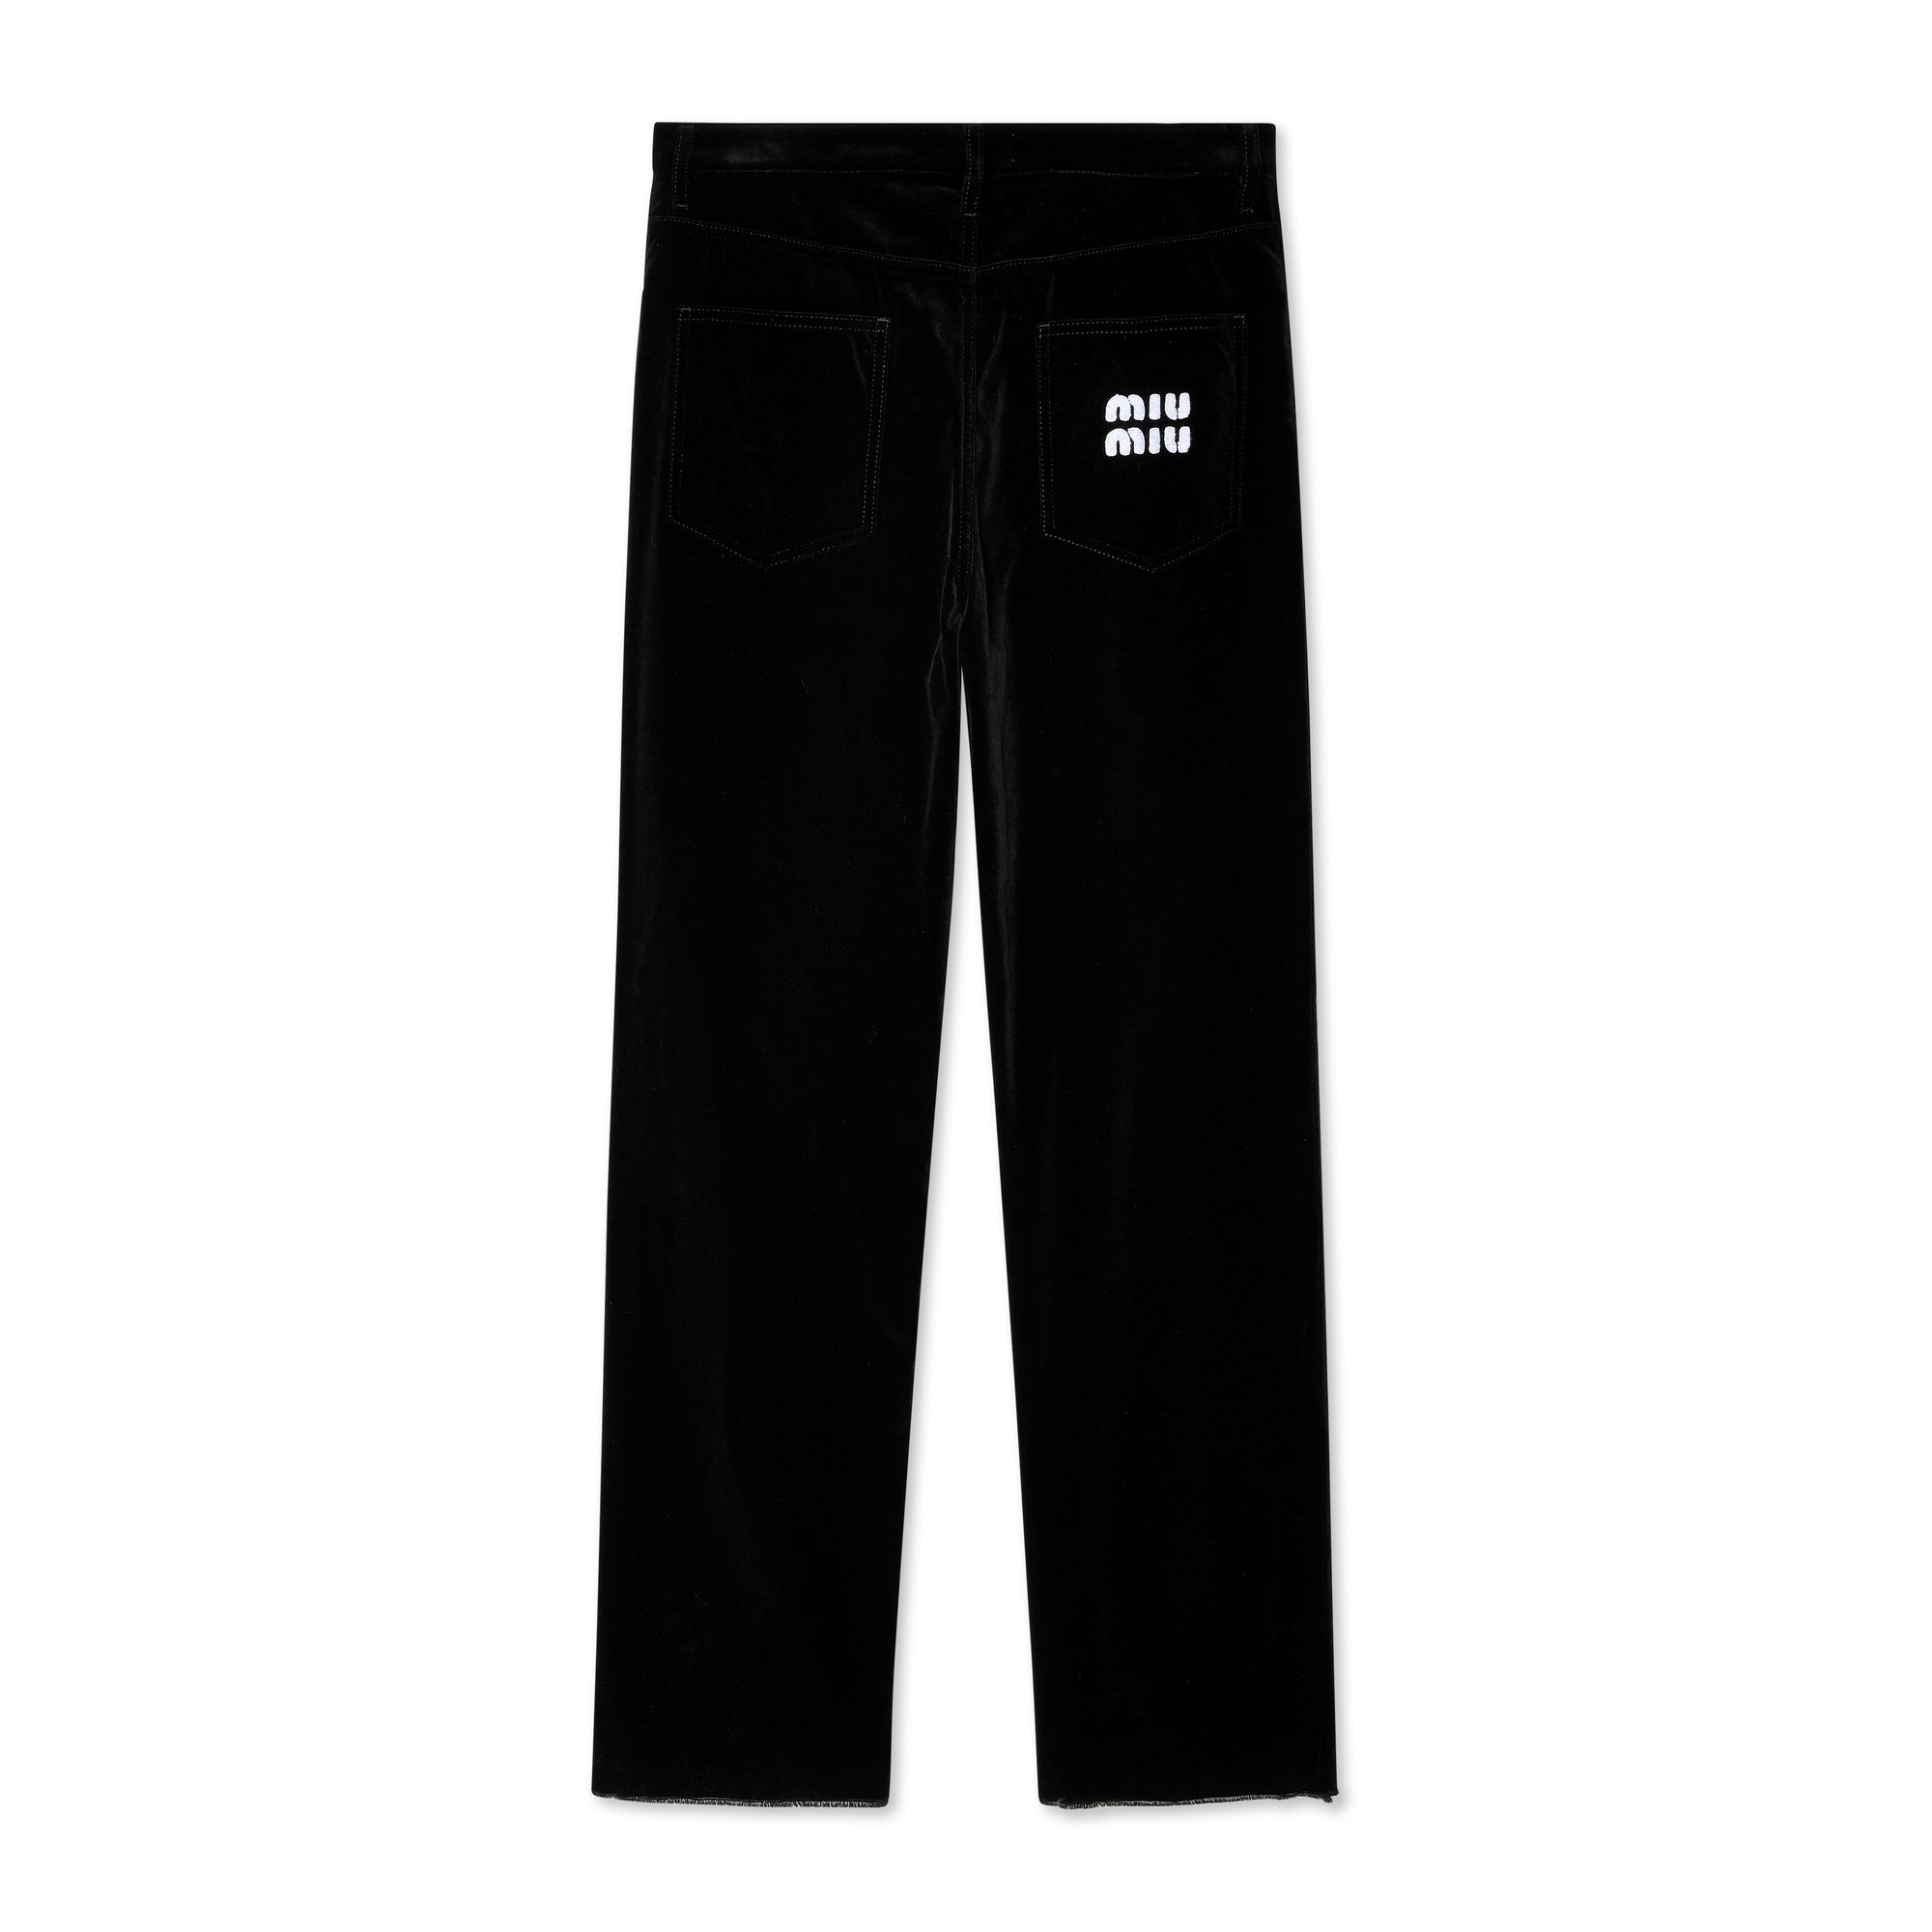 Miu Miu - Women's Washed Velvet Pants - (Black) view 2